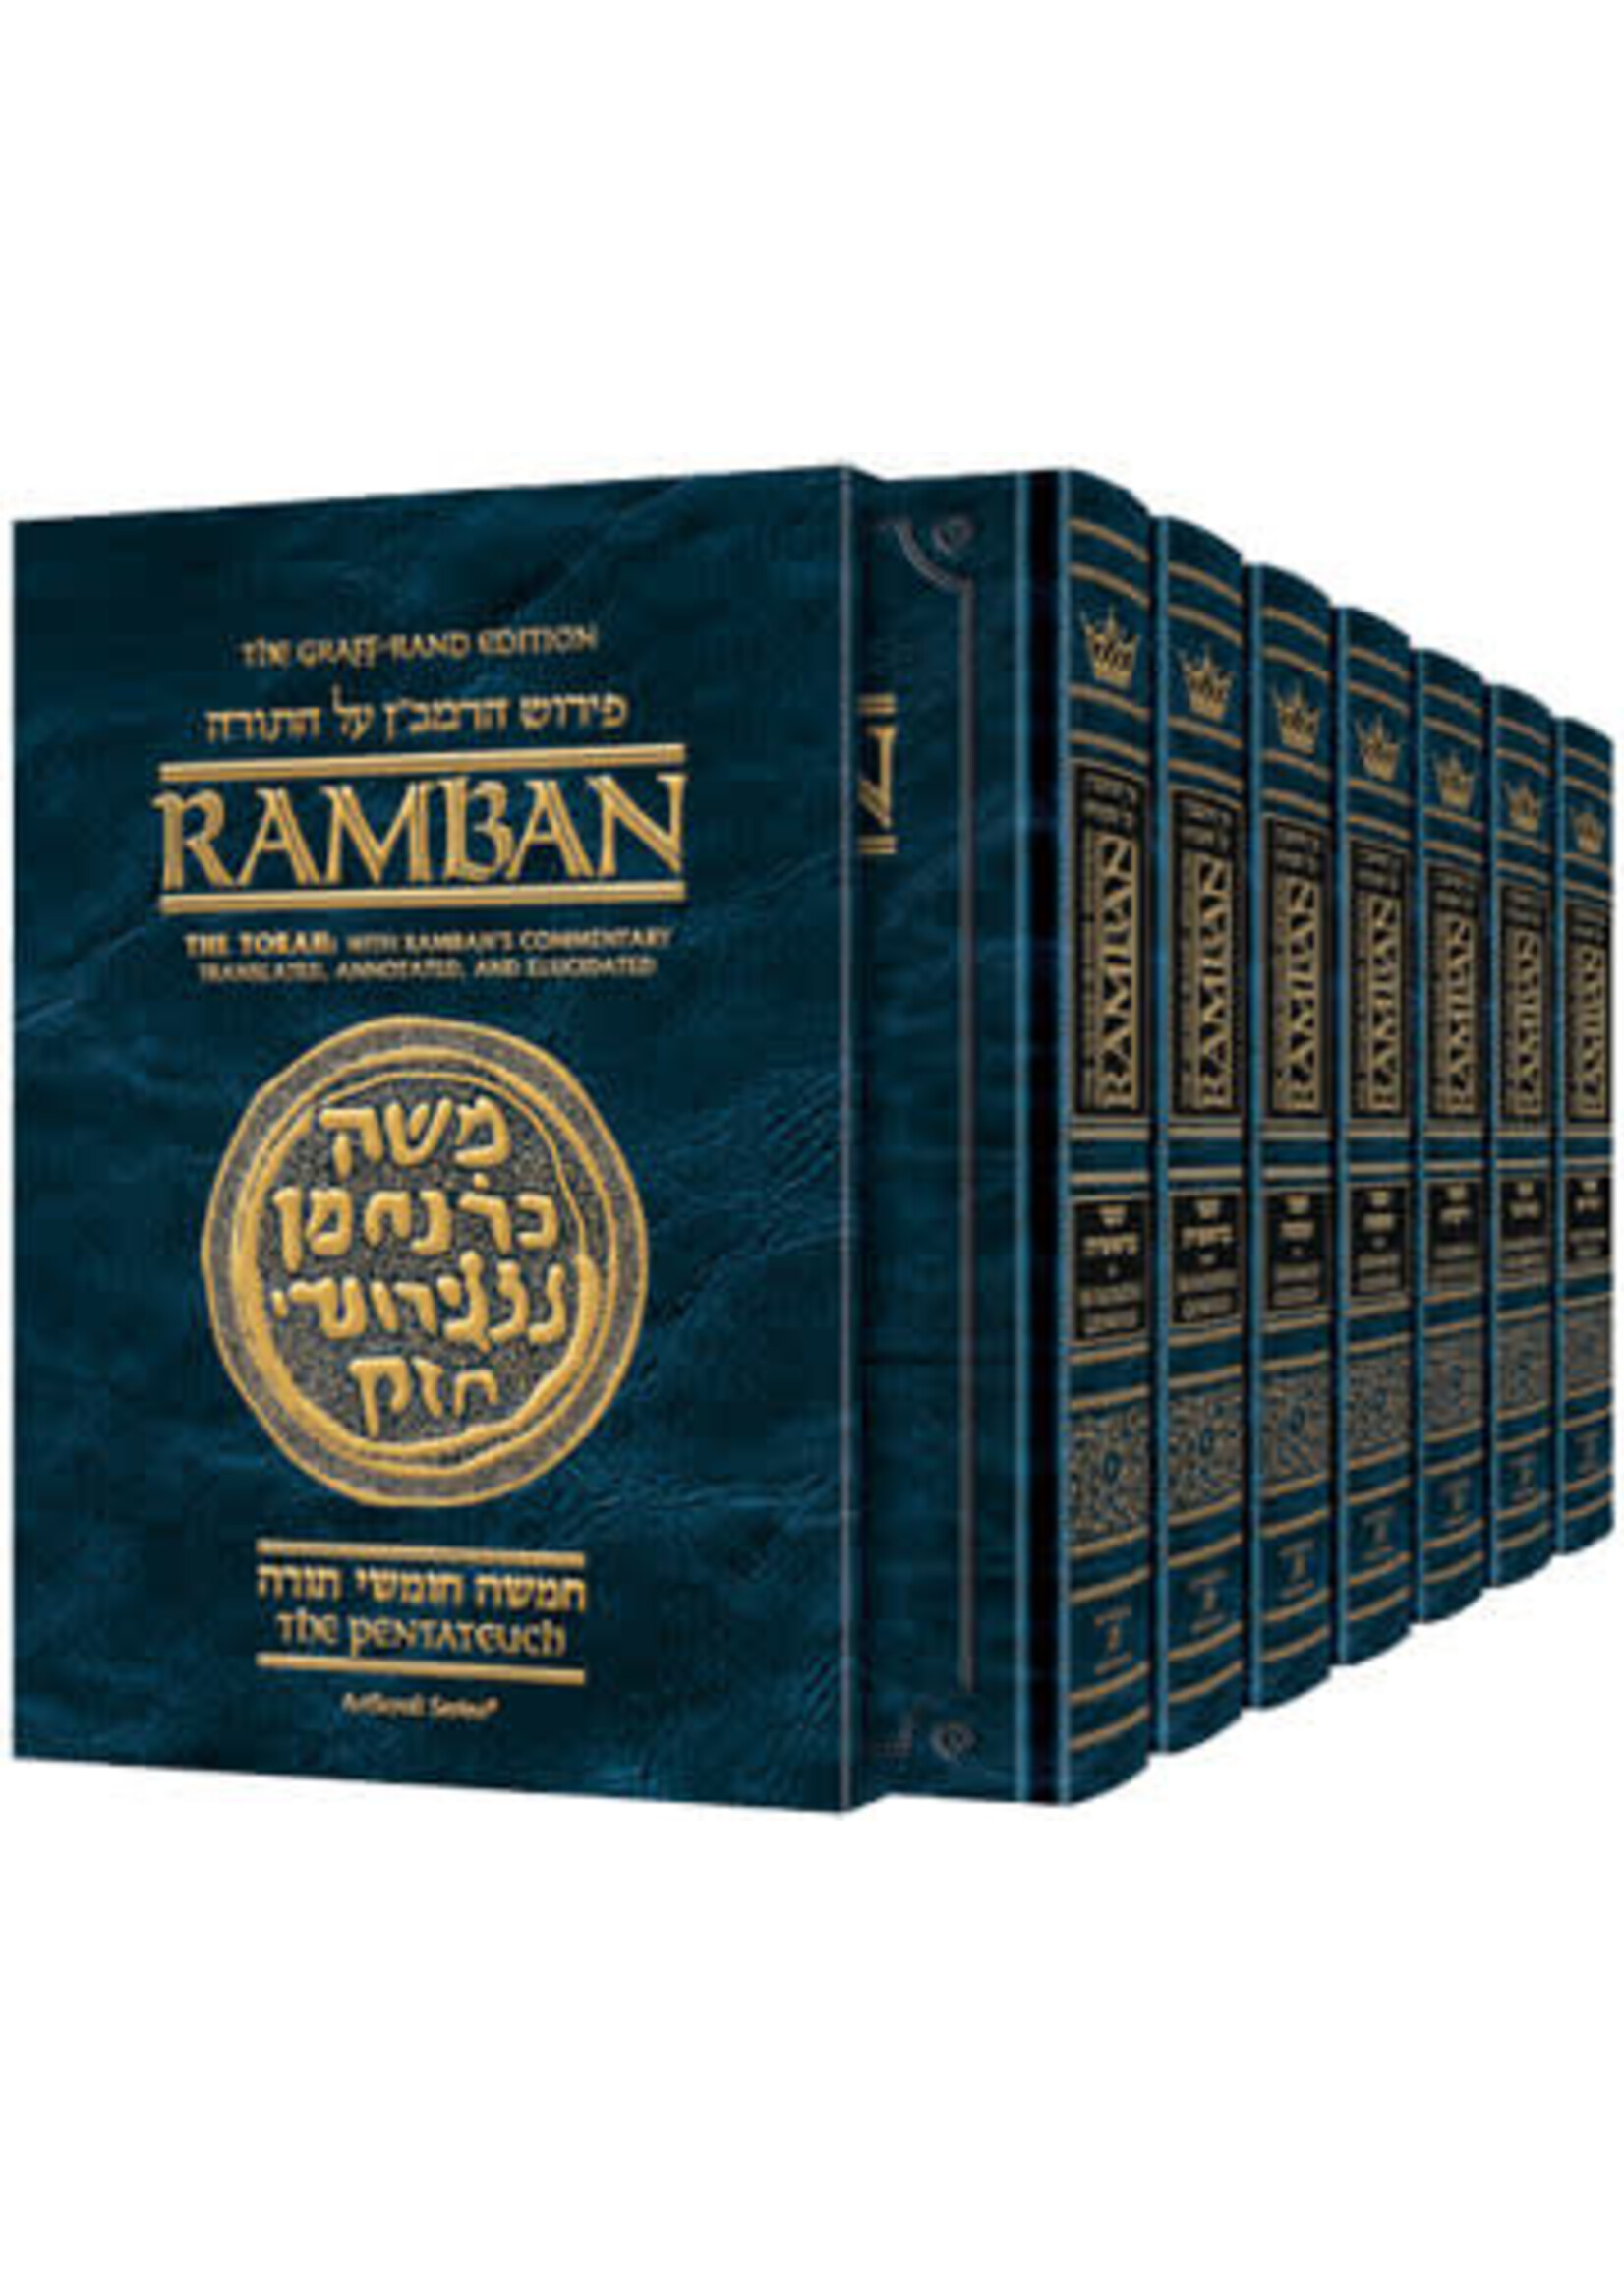 RAMBAN COMPLETE 7 VOLUME SET